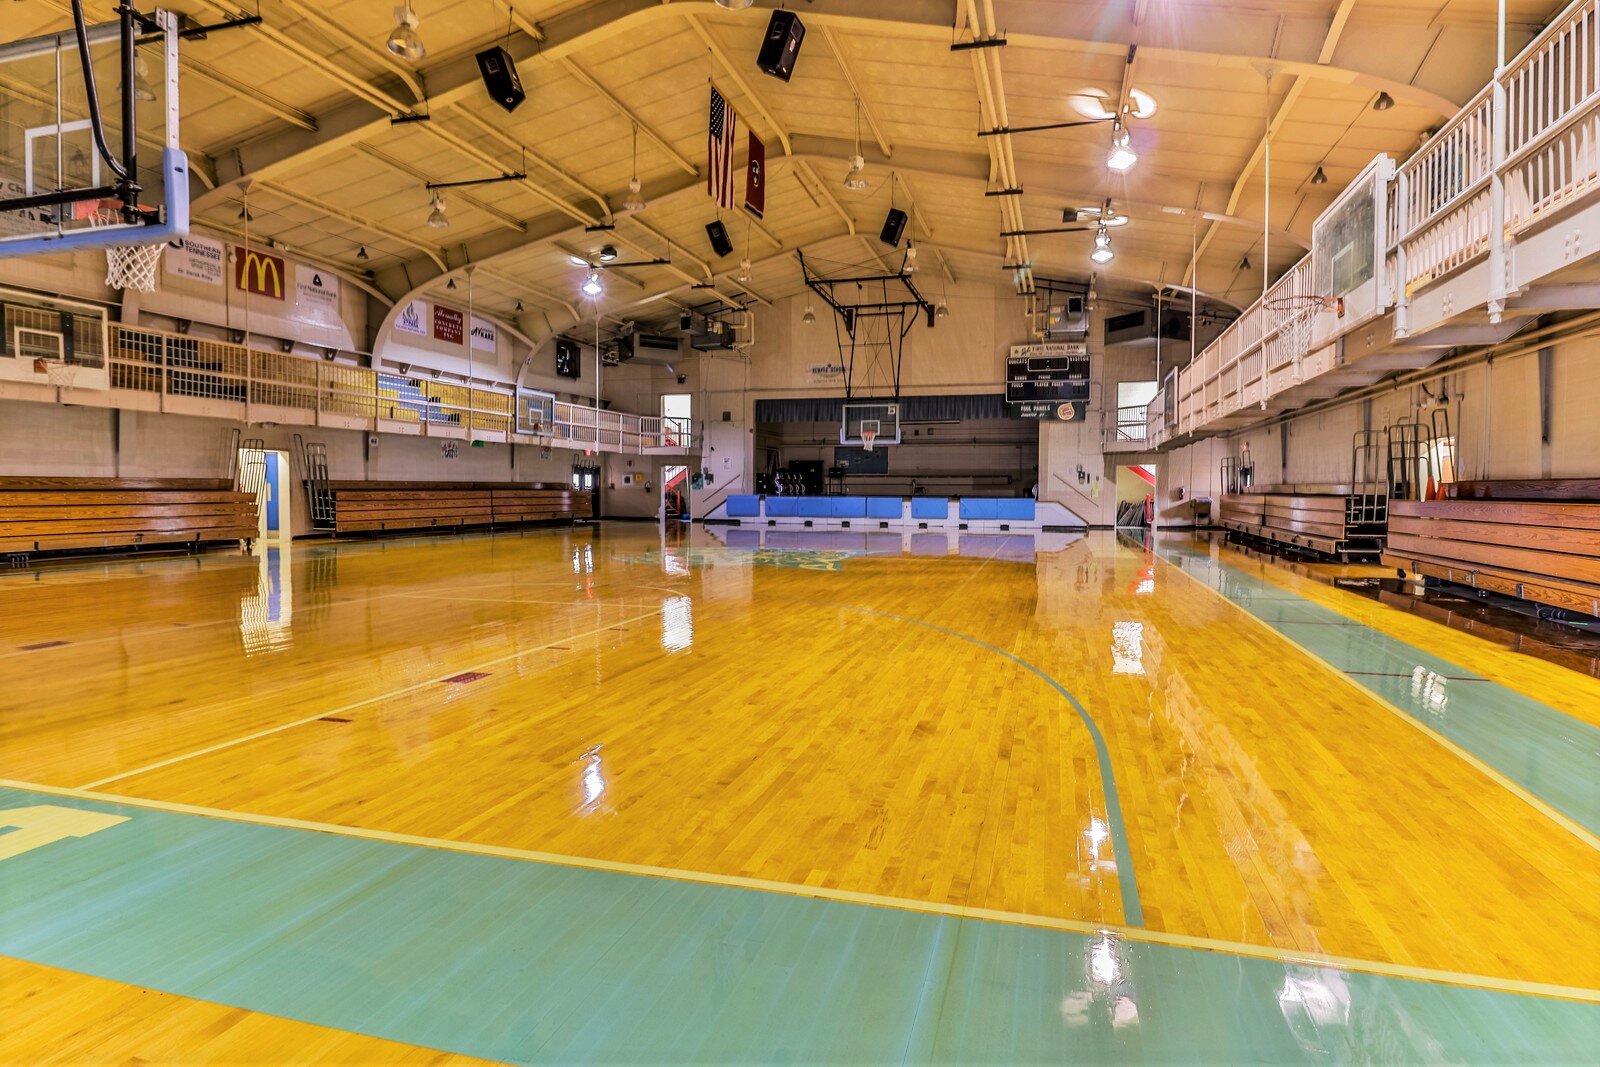 bridgeforth-middle-school-basketball-court.jpg